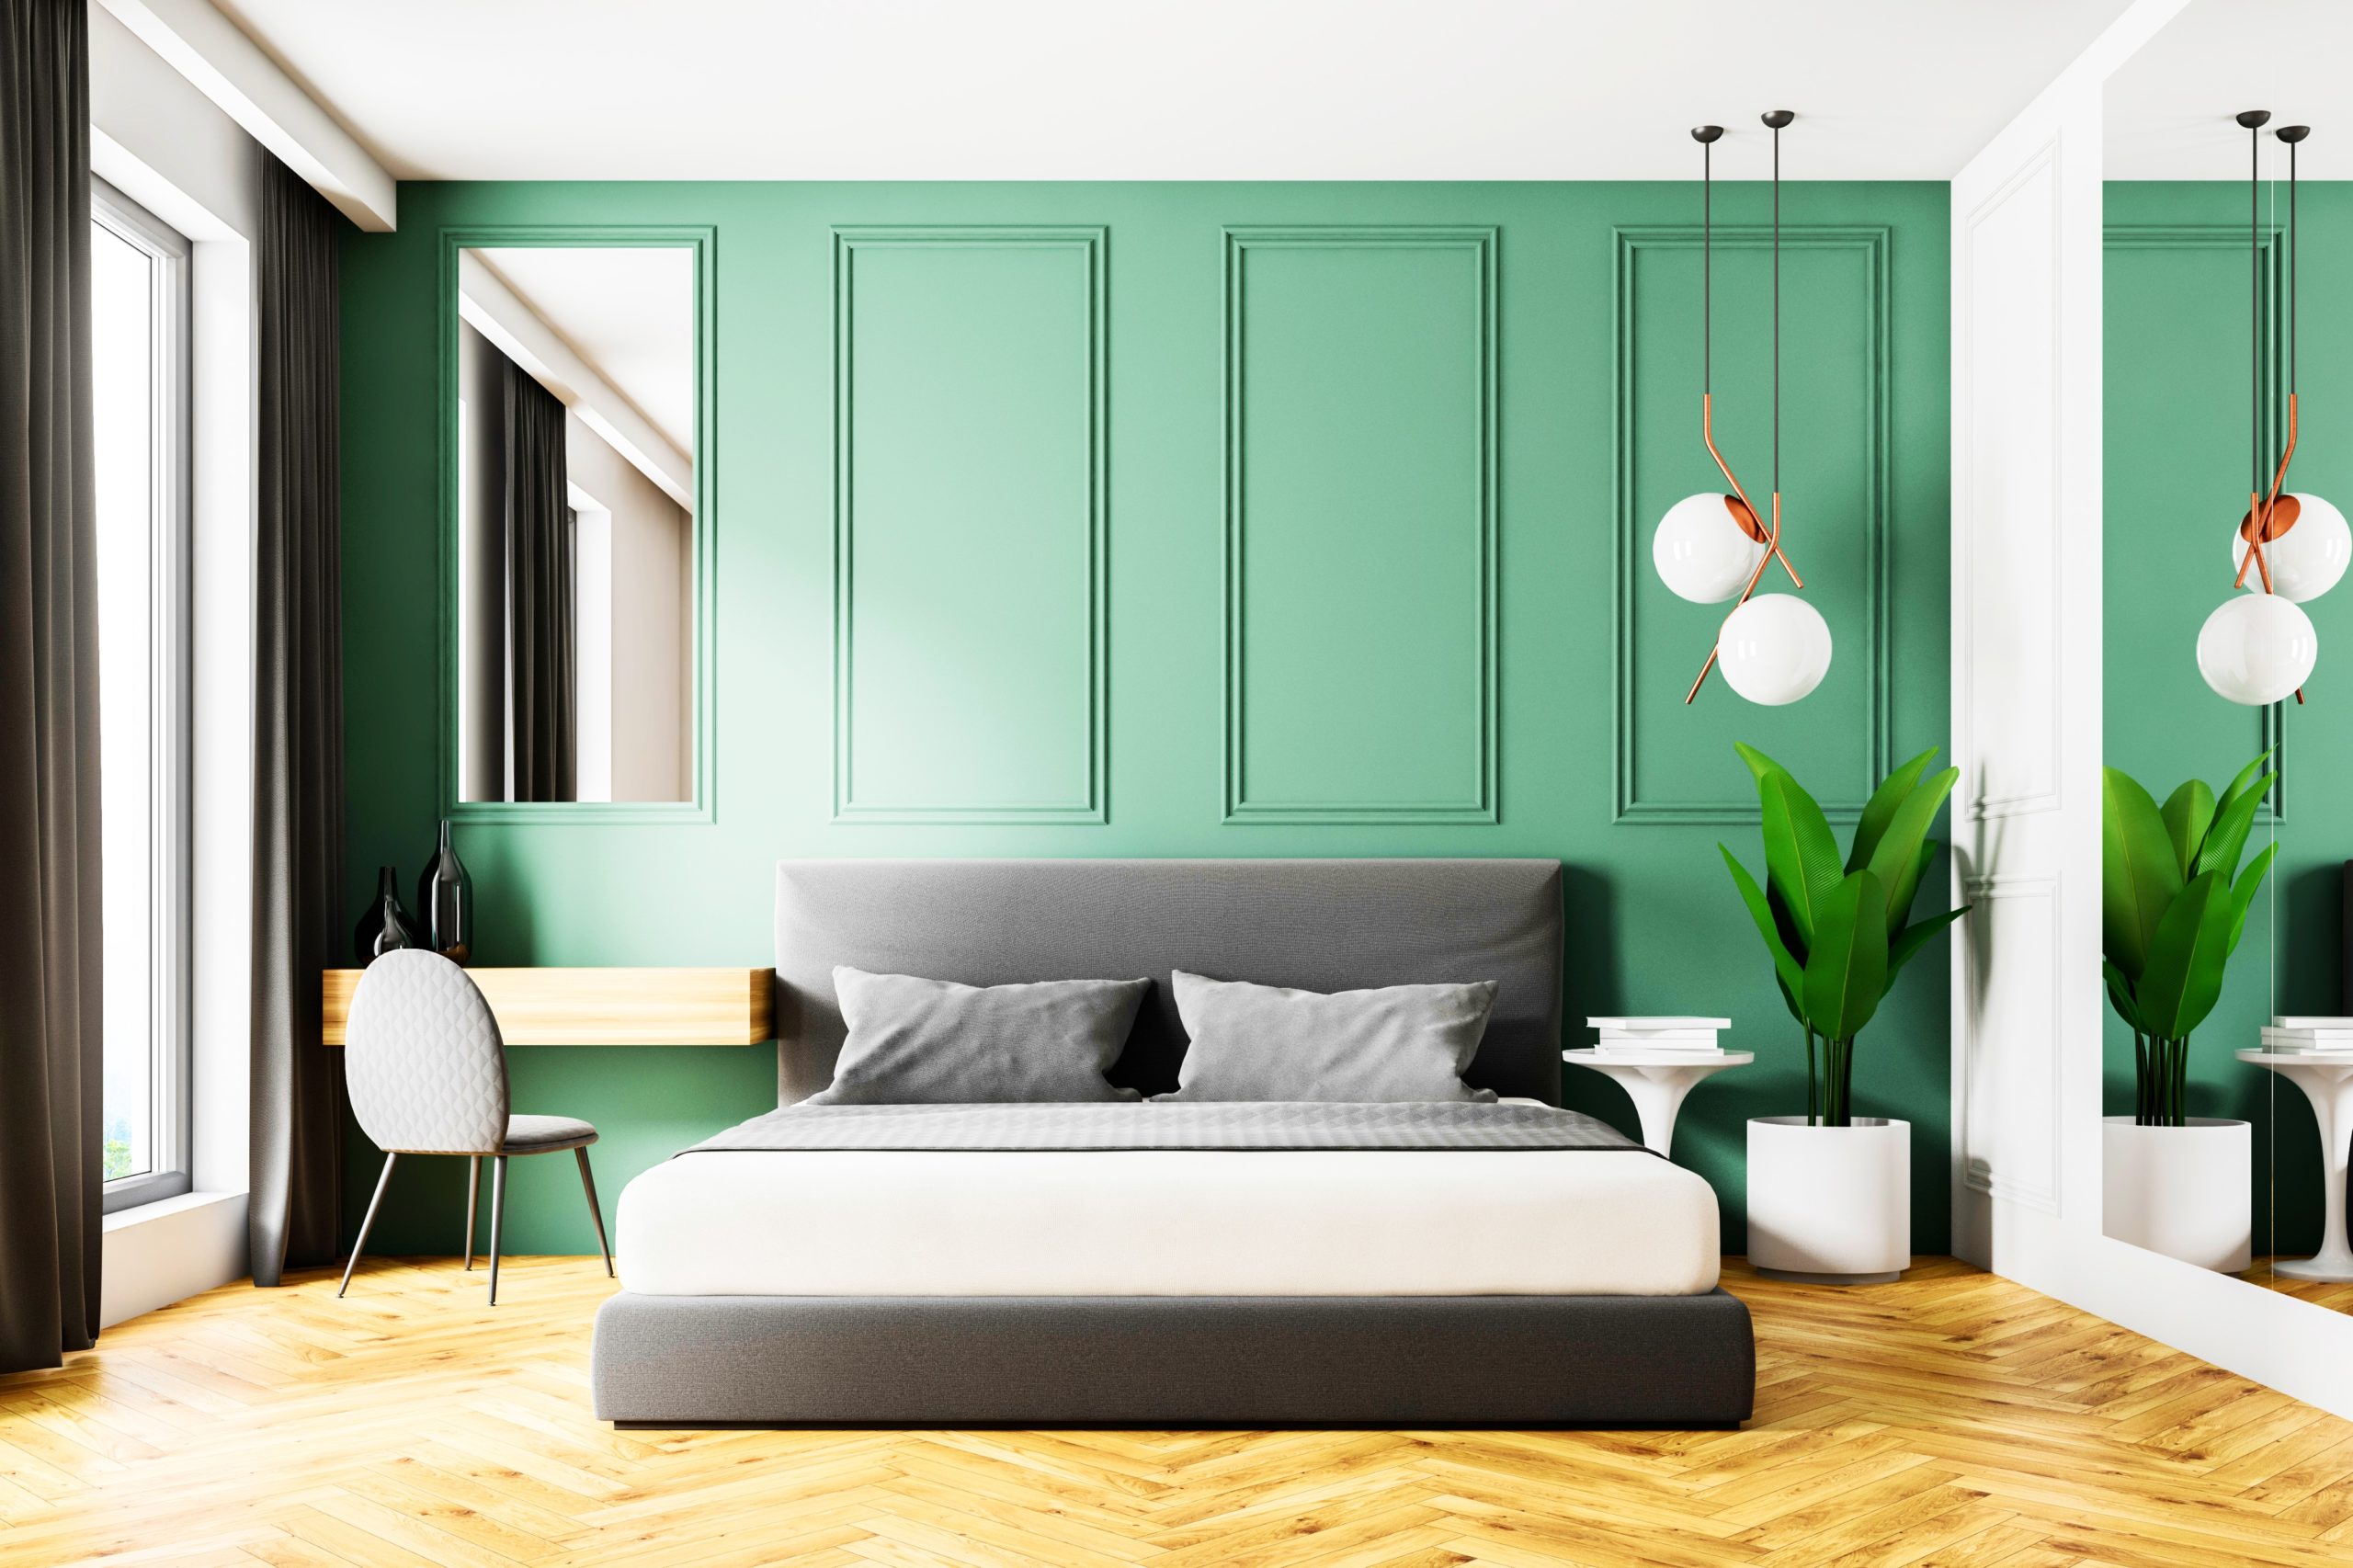 <img src="green.jpg" alt="green bedroom with quirky light fixture"/> 